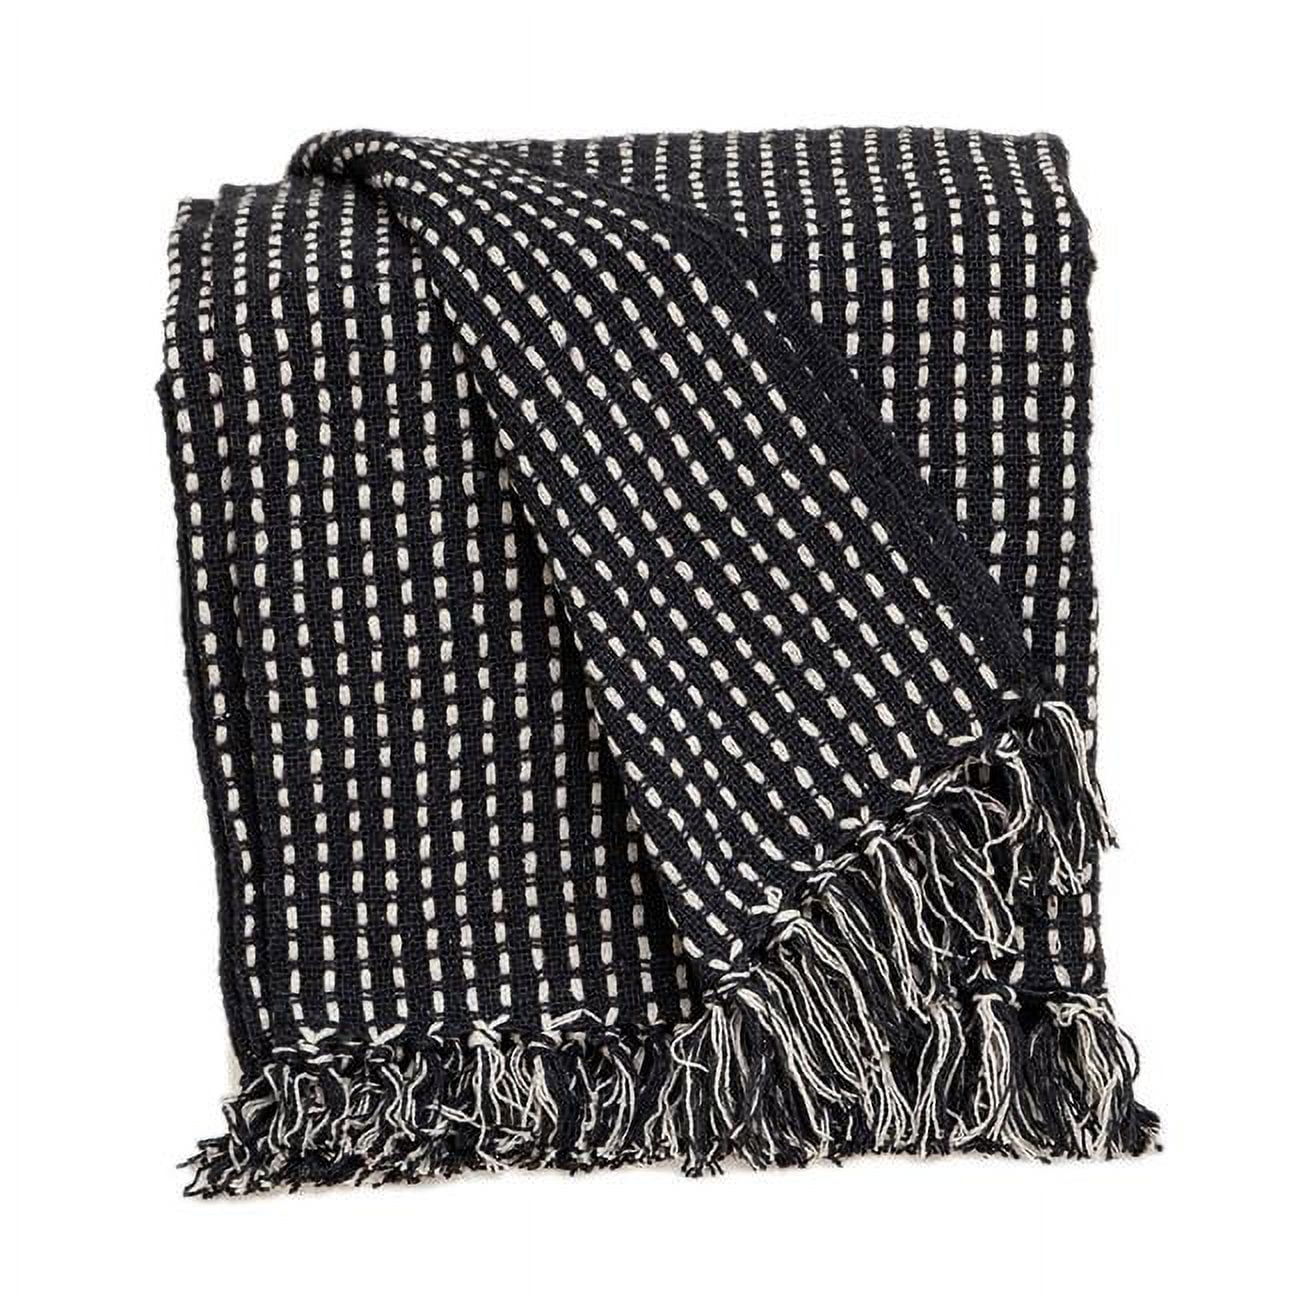 Handloom grey and black woven throw blanket at ?1550